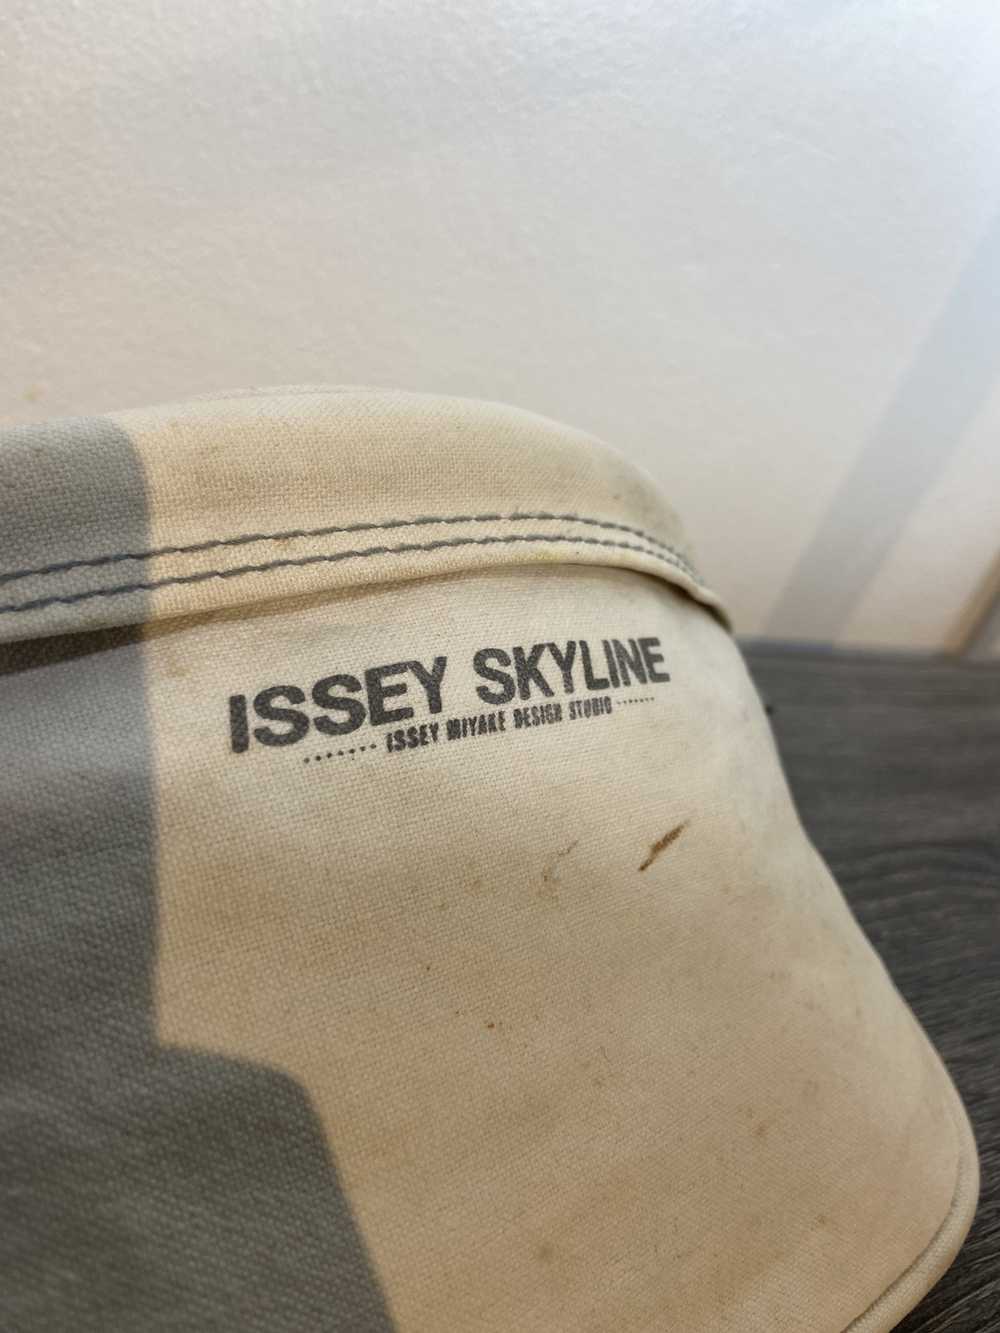 Issey Miyake Vintage Issey Skyline 80s Belt Bag - image 3